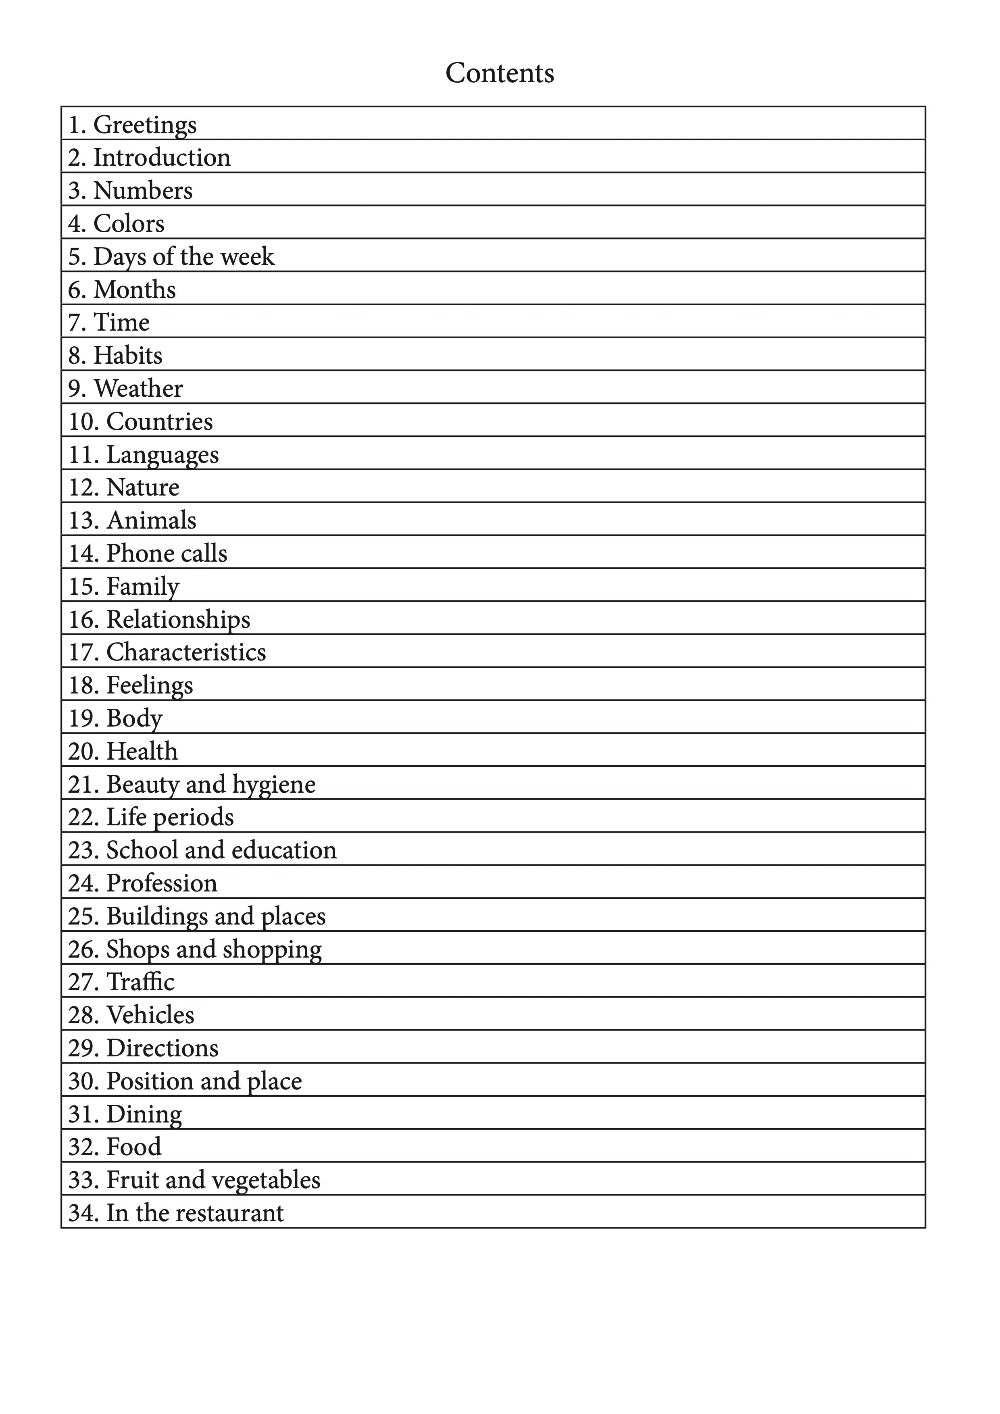 Mazahua language learning notebook contents page 1